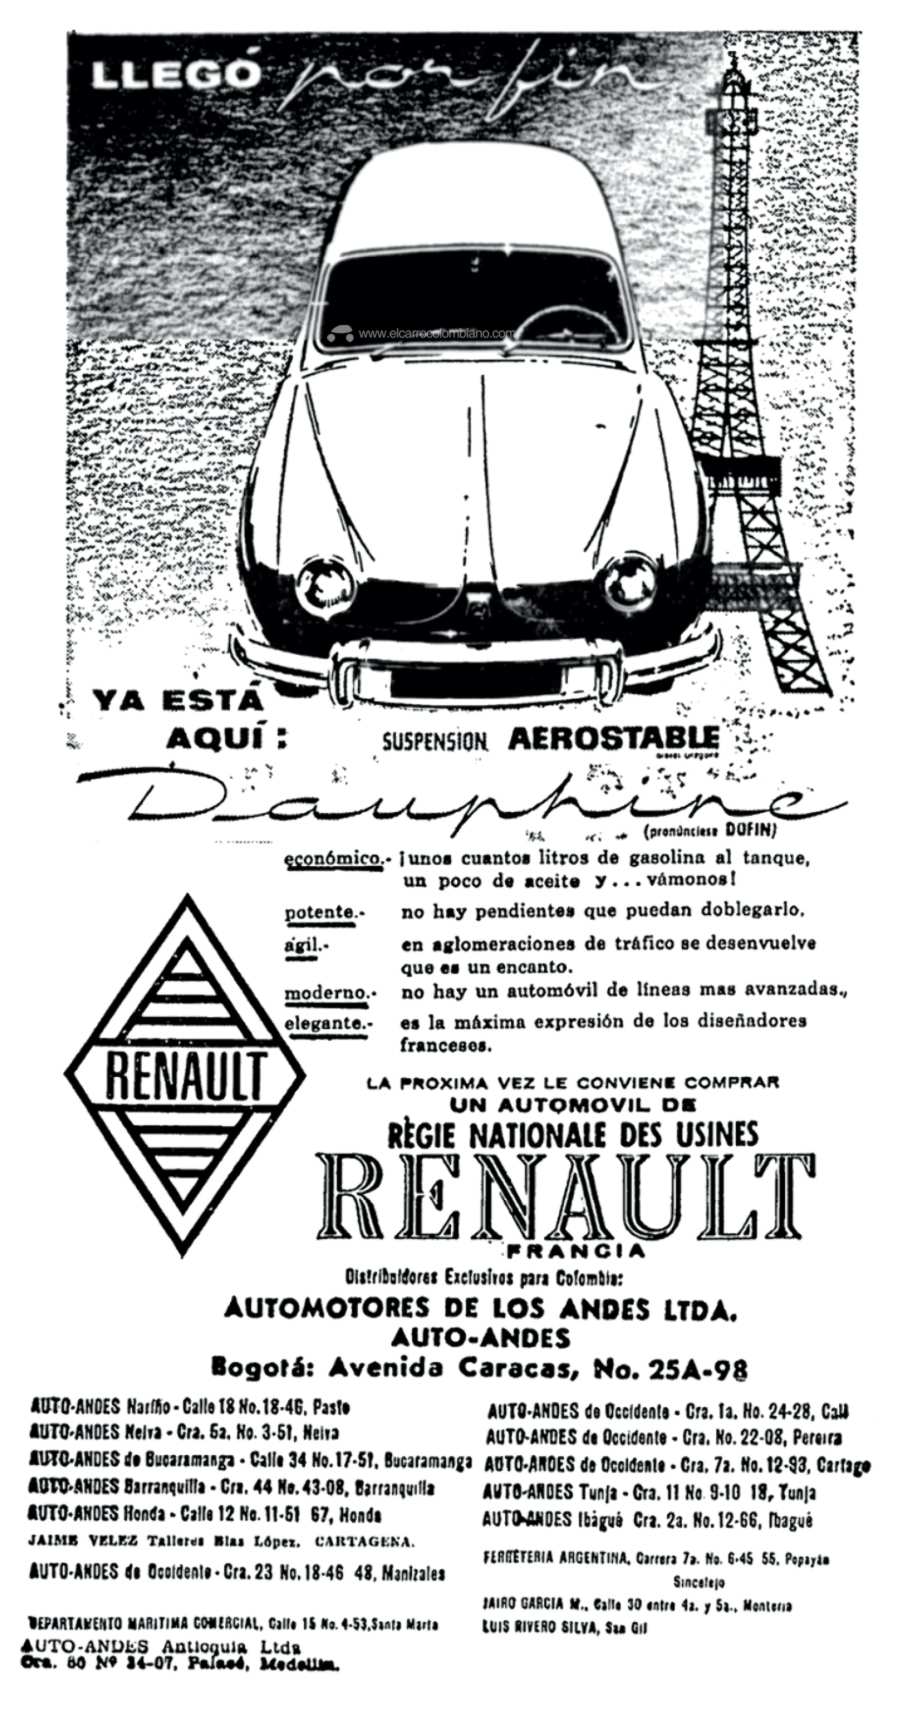 Renault Dauphine en Colombia